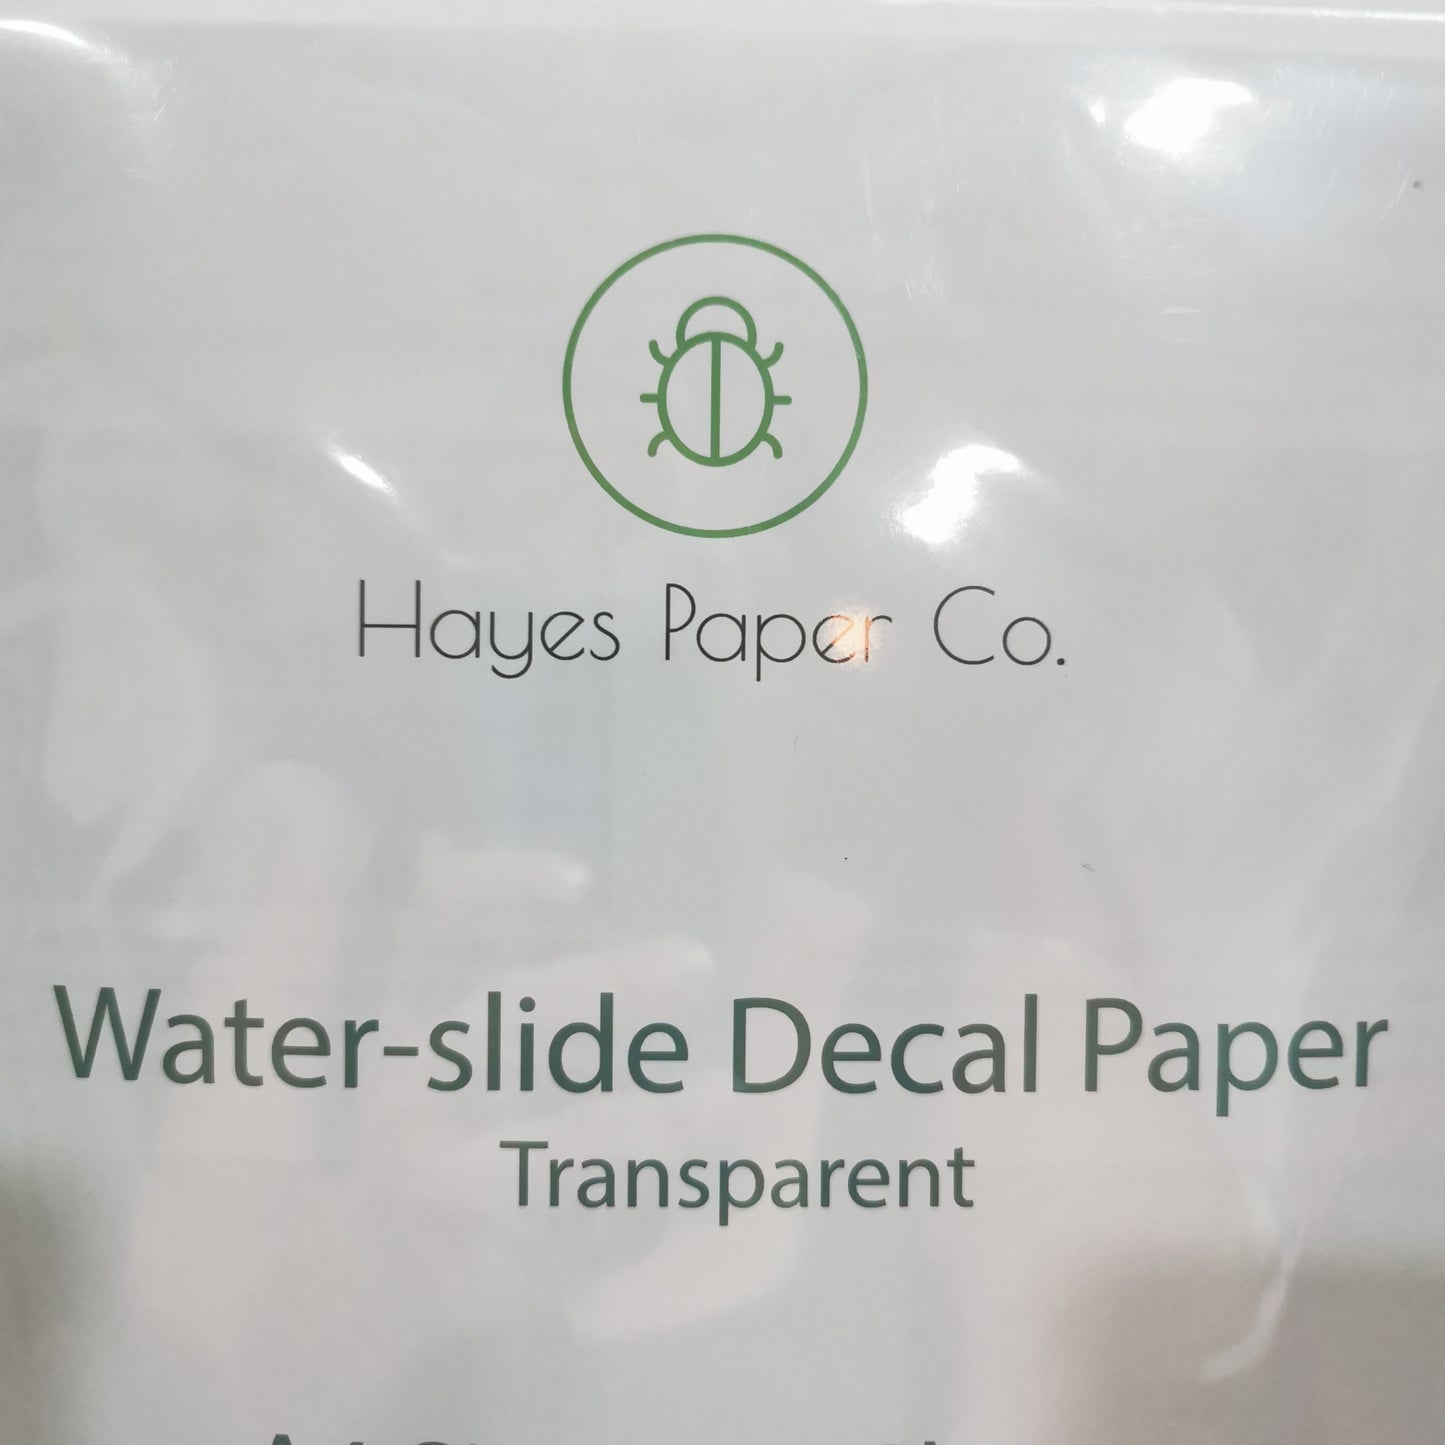 Water-slide Decal Paper - Transparent